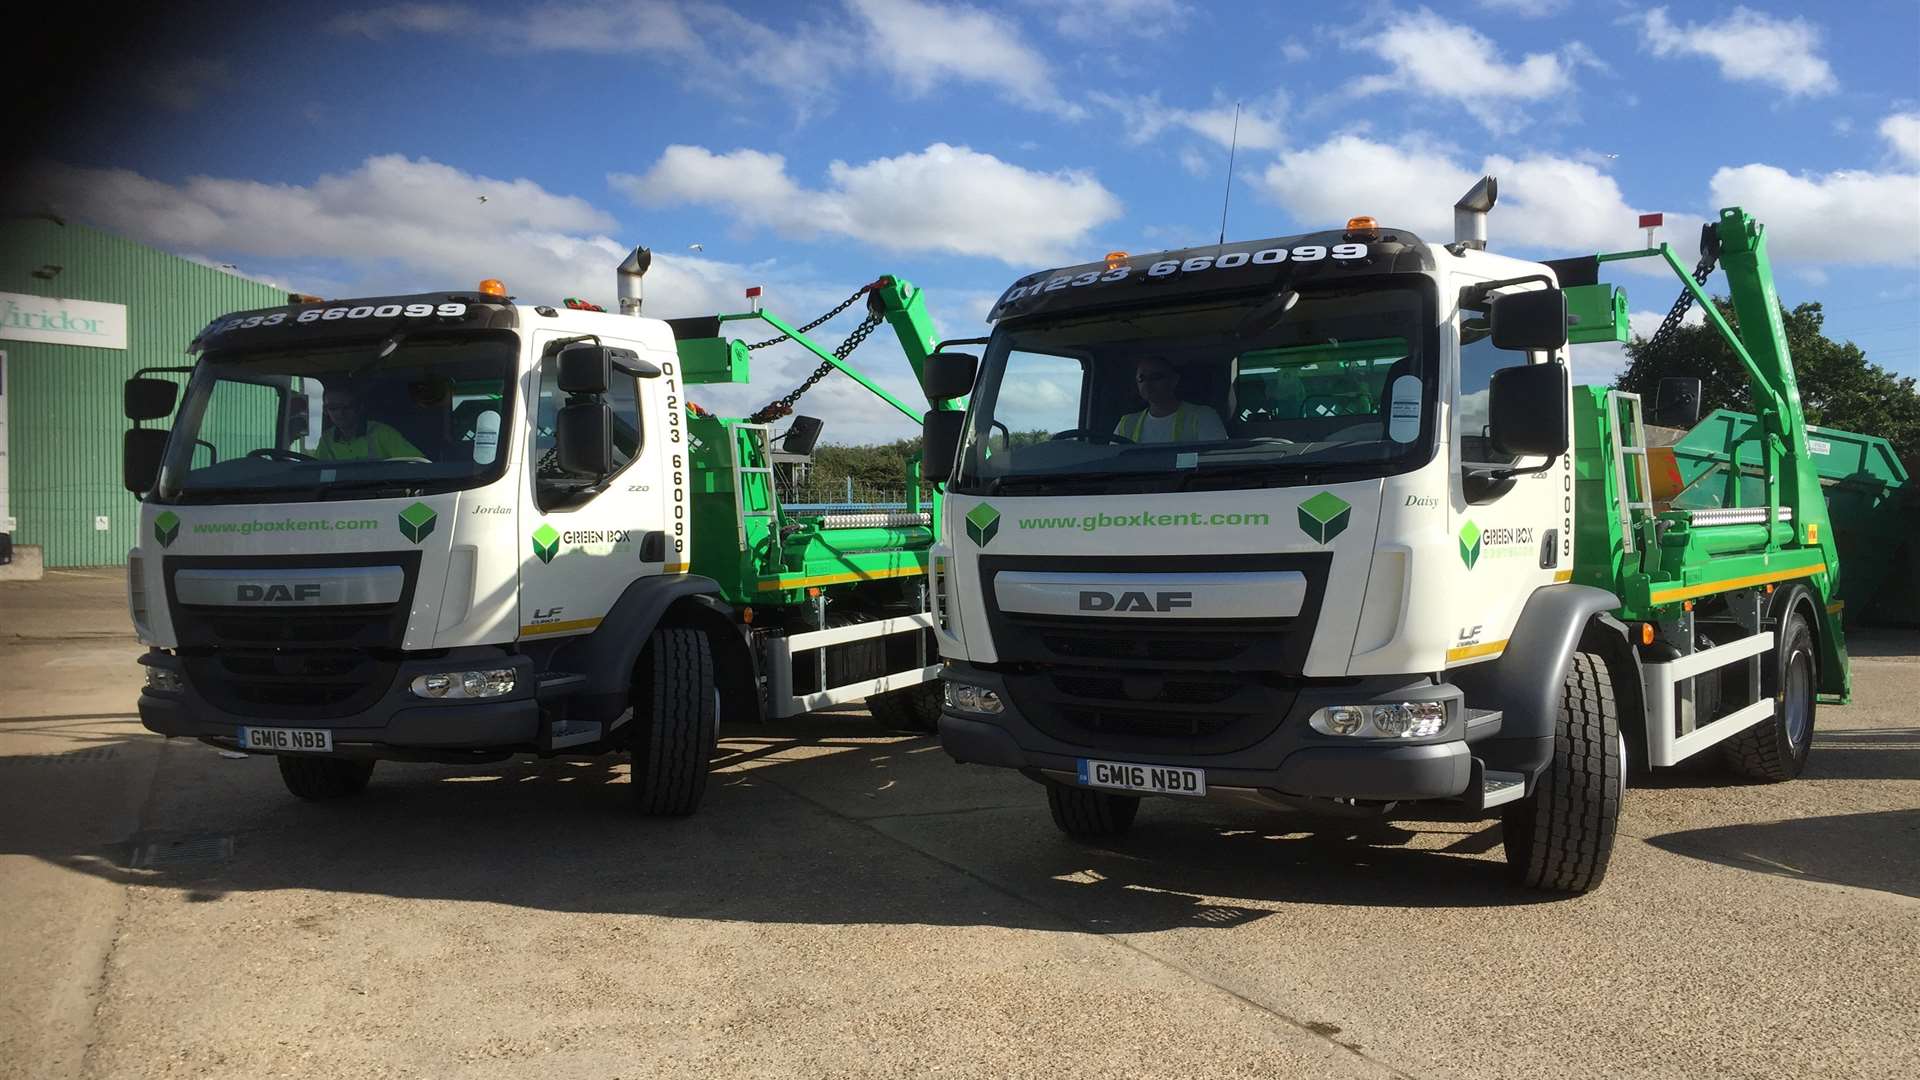 Greenbox Recycling lorries